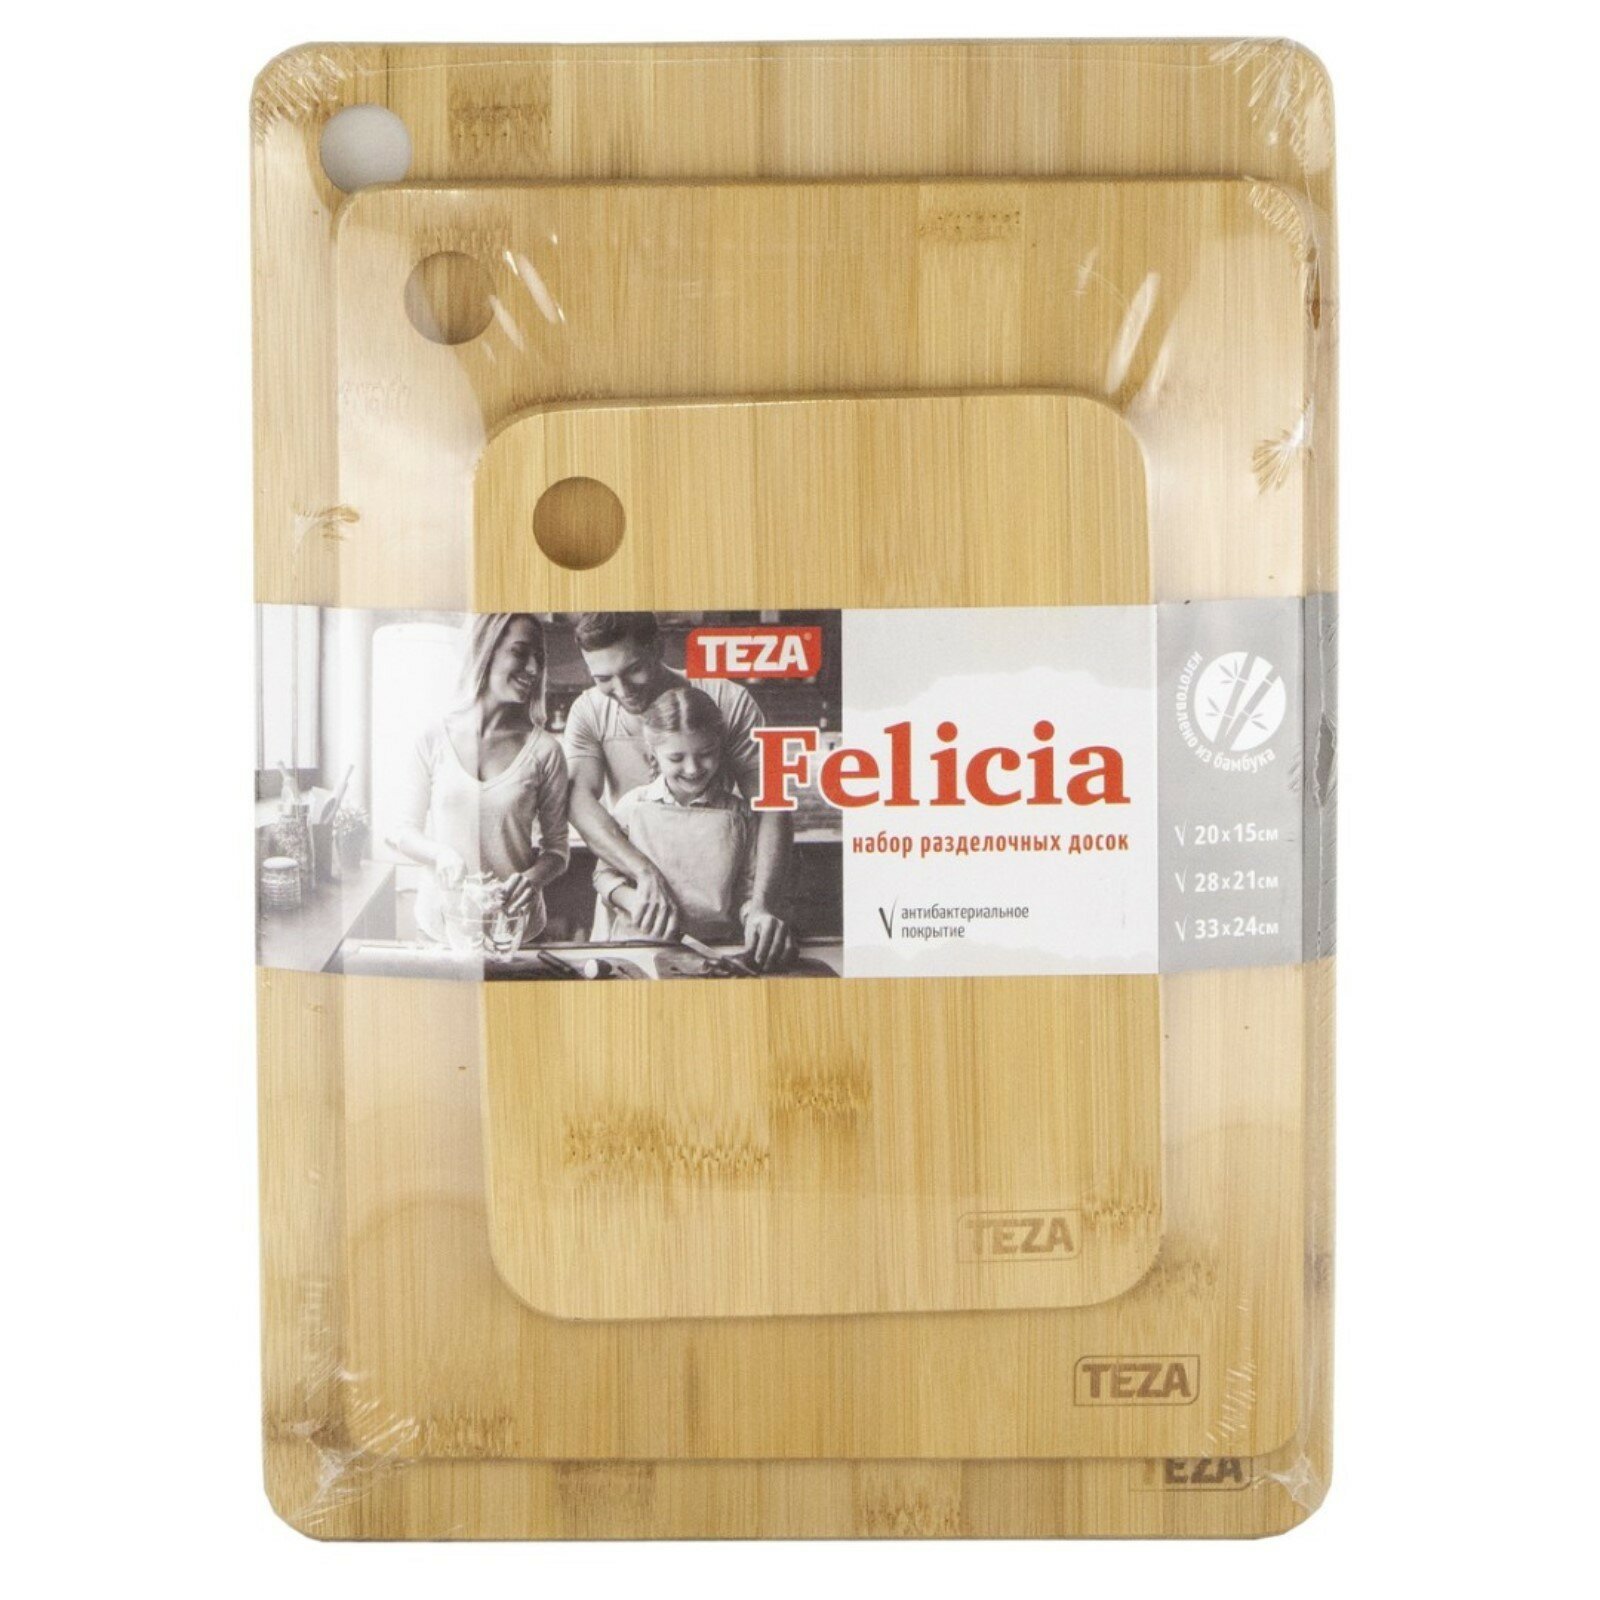 Набор досок "Felicia" 3 доски (20x15x1см, 28x21x1см, 33x24x1см) - фотография № 5